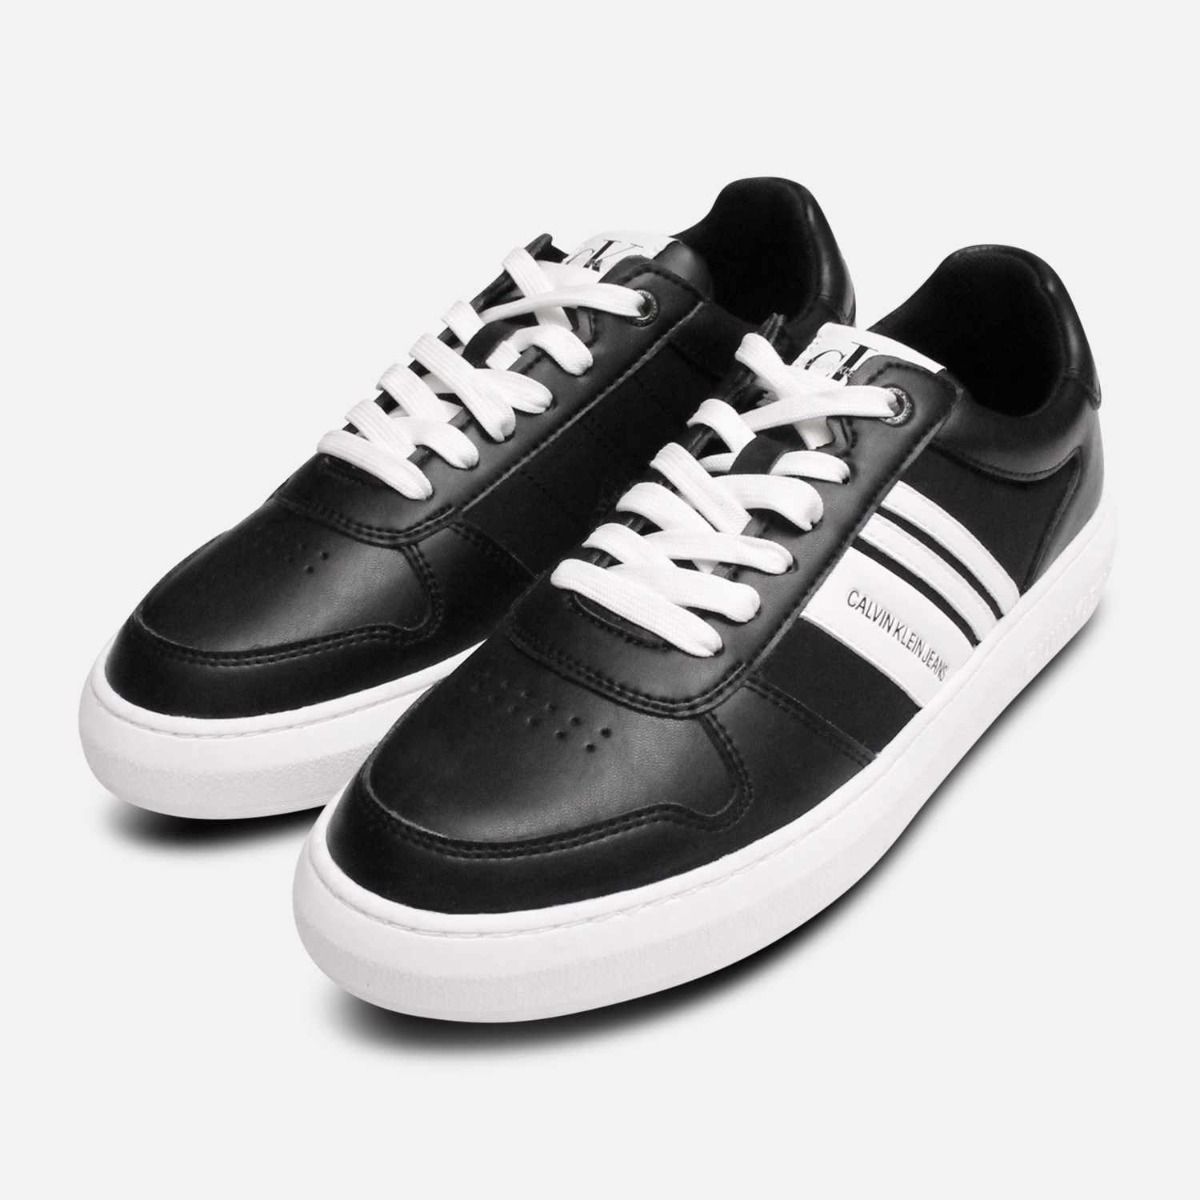 Introducir 42+ imagen calvin klein shoes black and white - Giaoduchtn ...